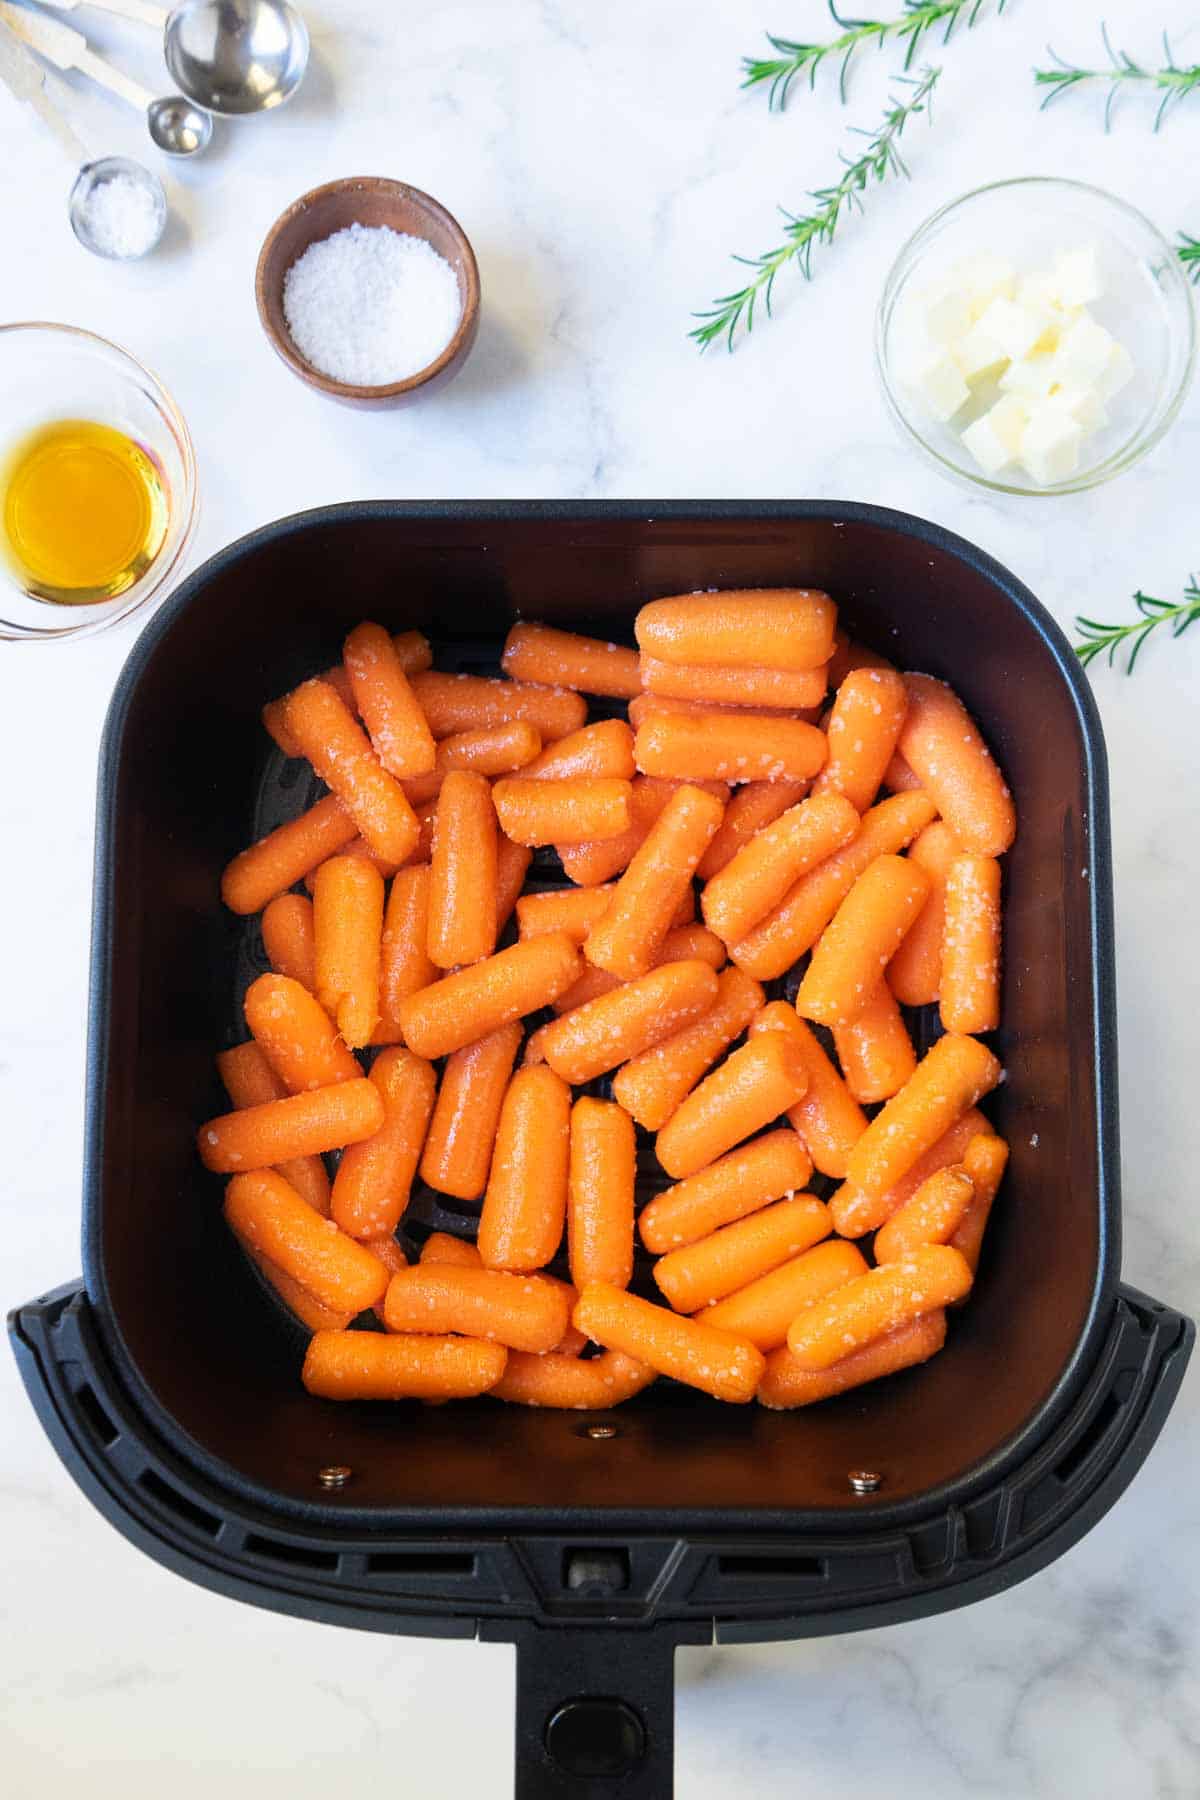 Air fryer roasted carrots in the air fryer basket.